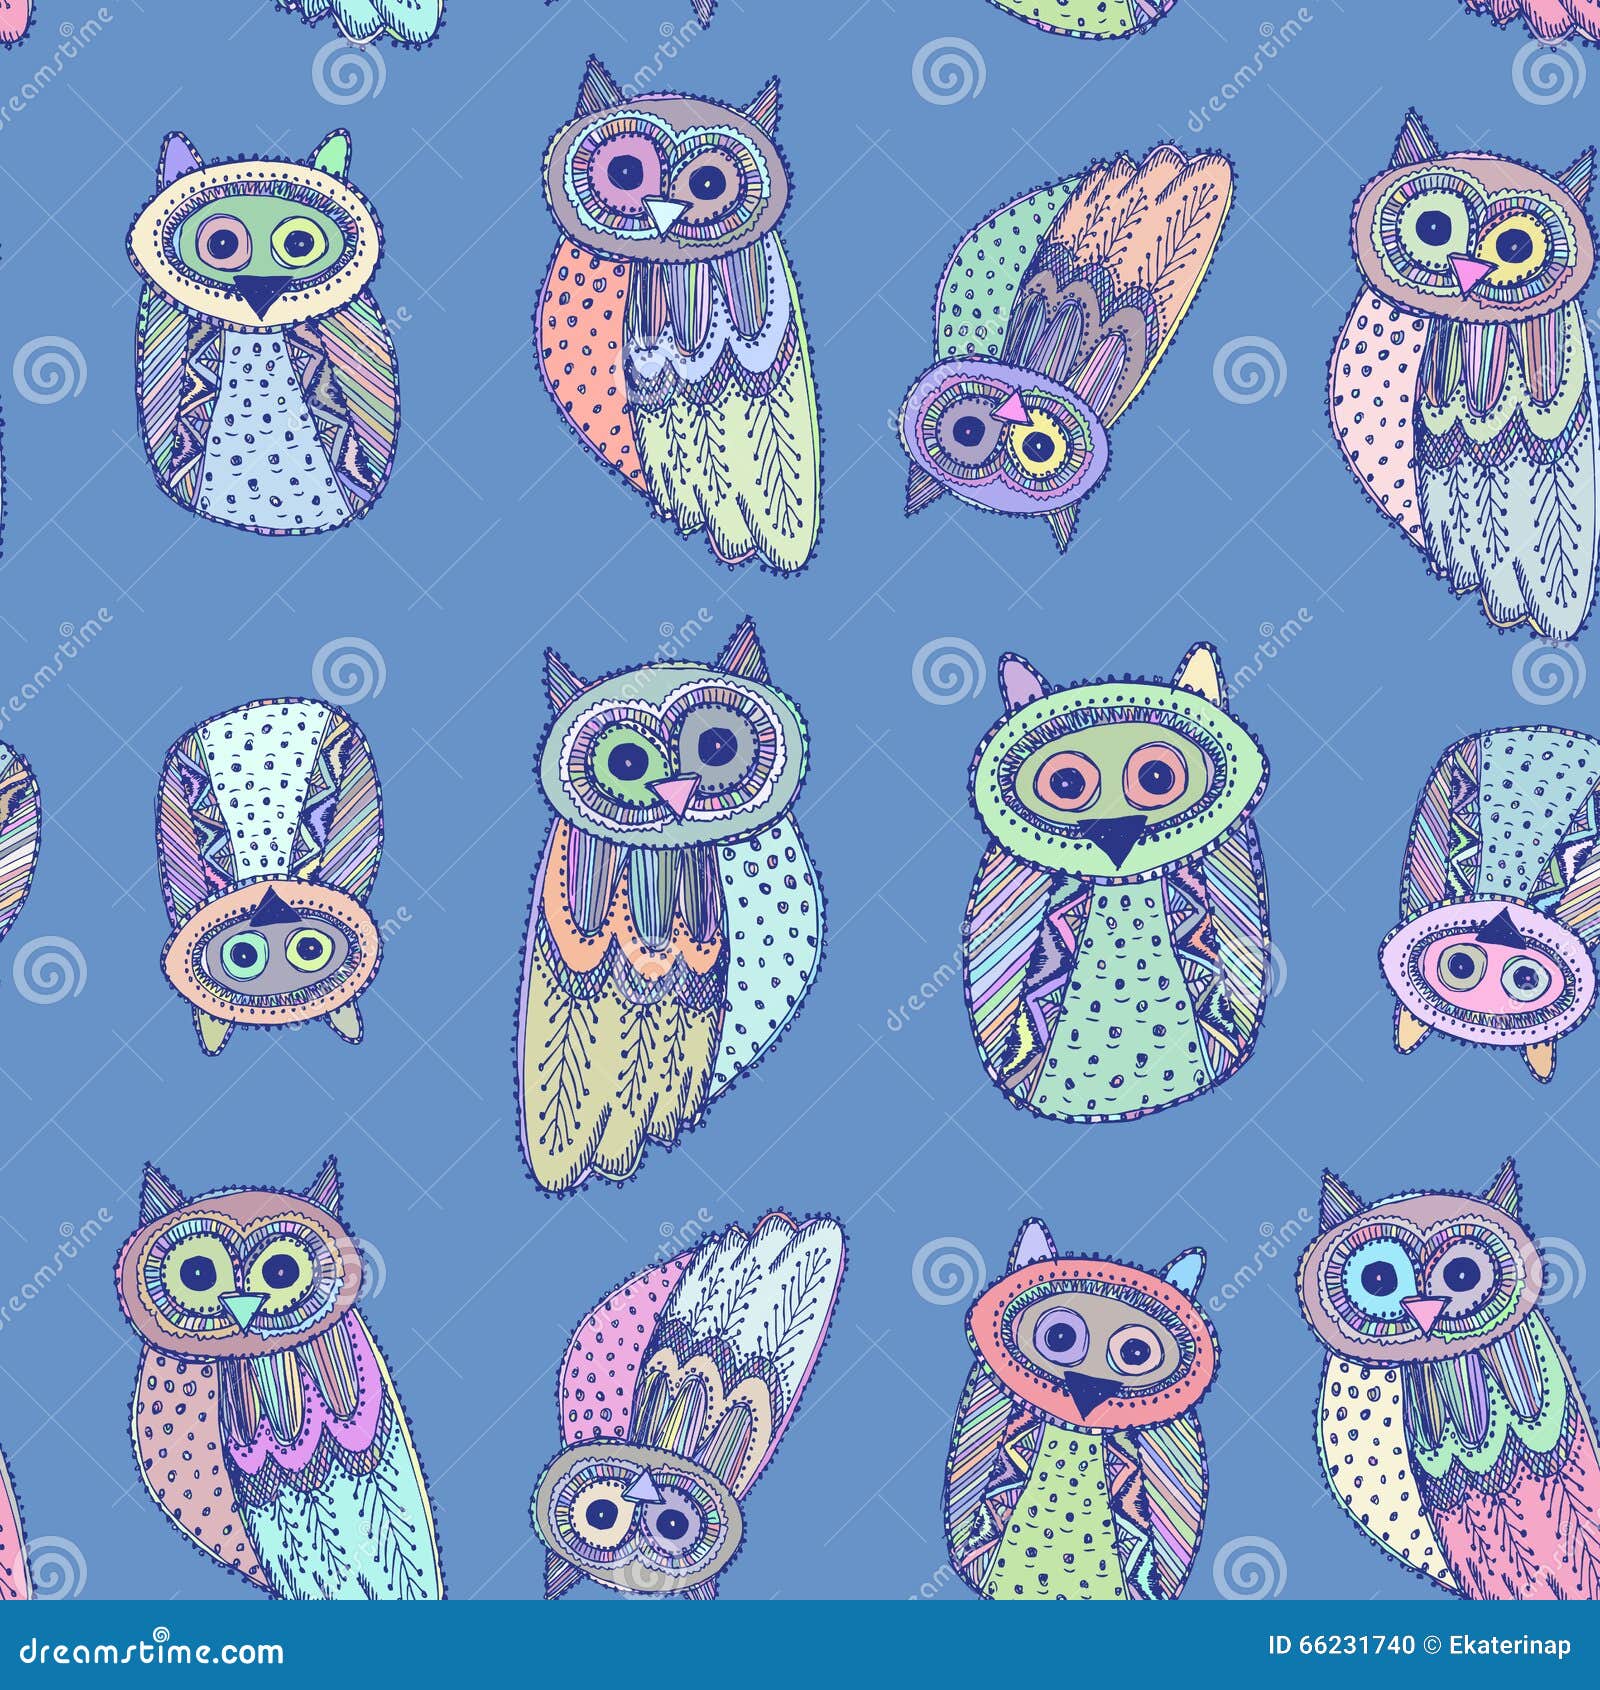 Decorative Hand Dravn Cute Owl Sketch Doodle On Blue Background